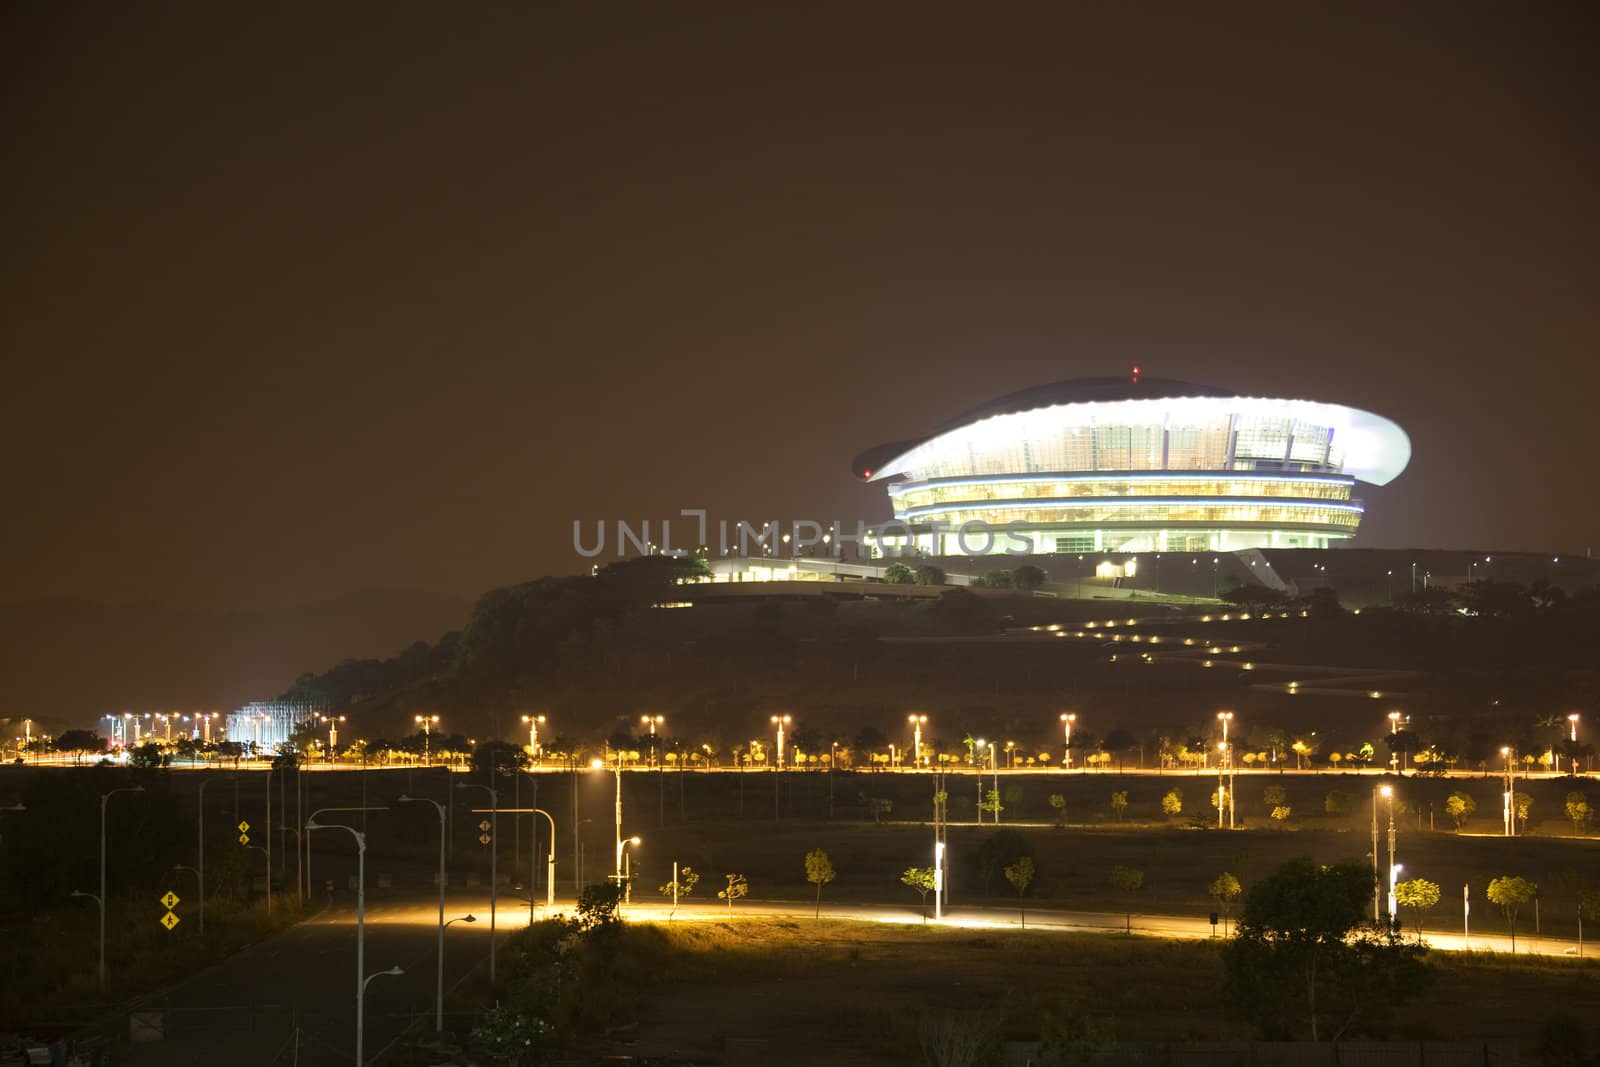 Night image of the Putrajaya International Convention Centre building and its vicinity at Putrajaya, Malaysia.